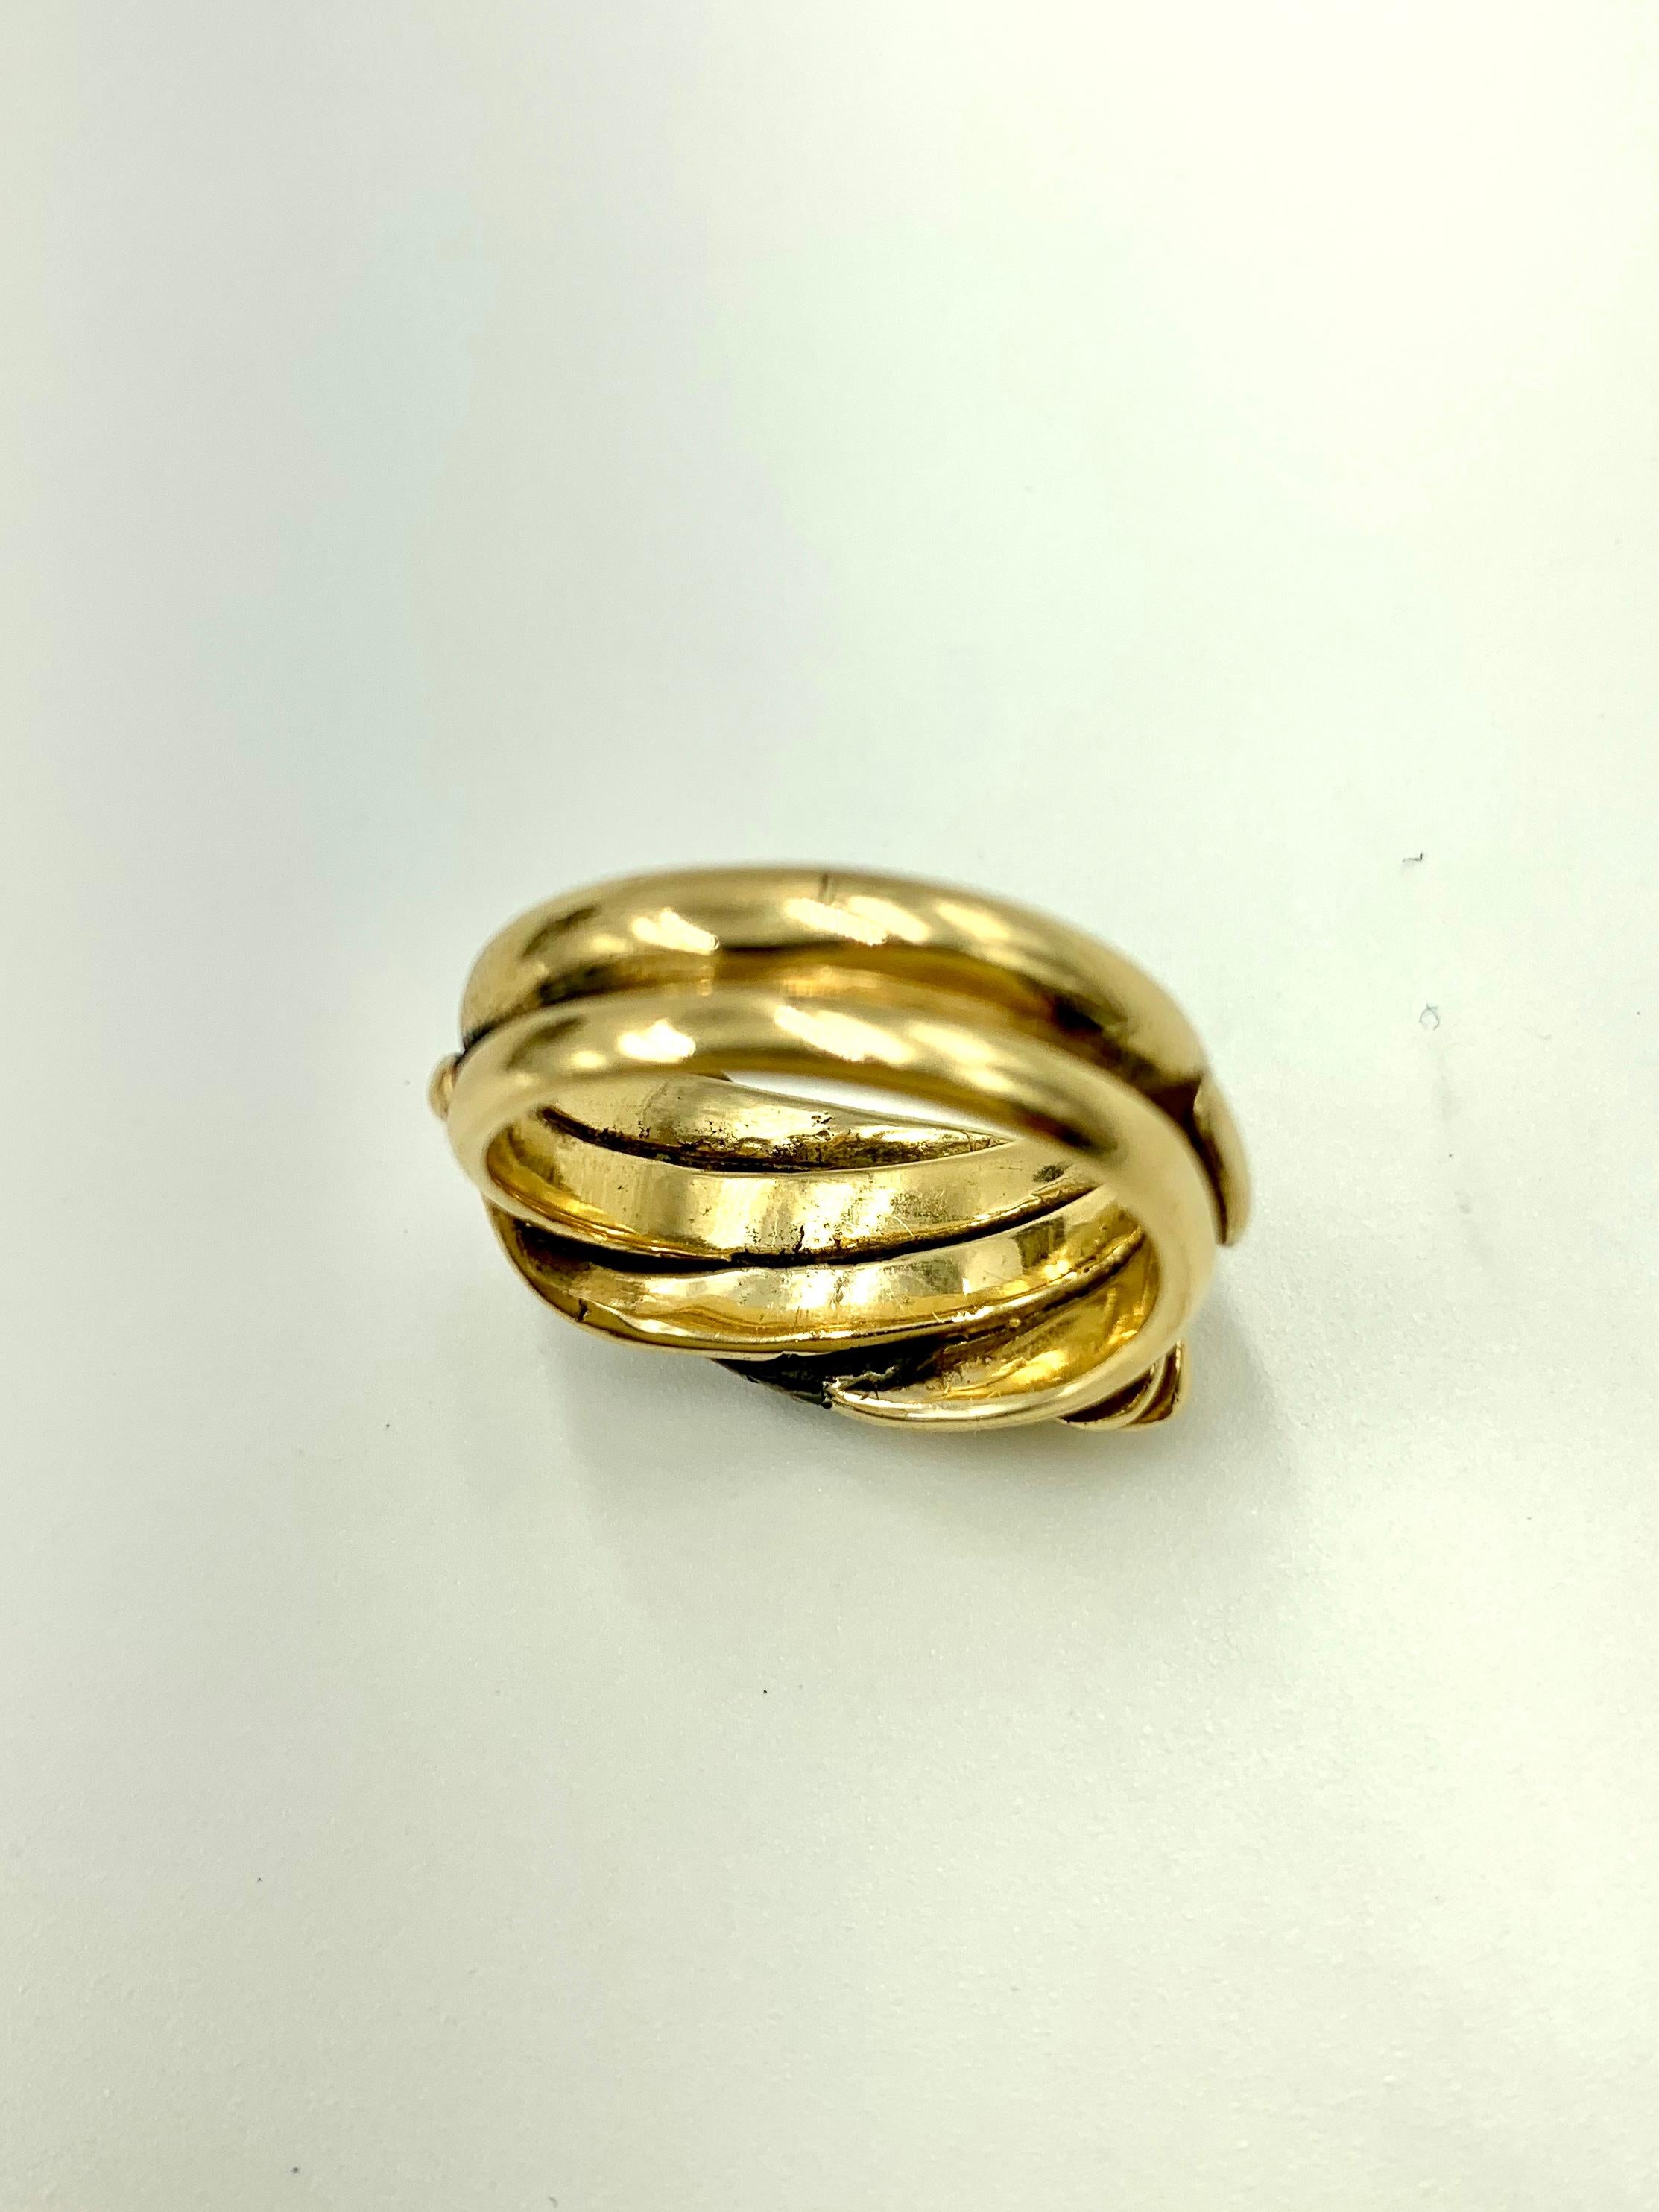 antique gold snake ring